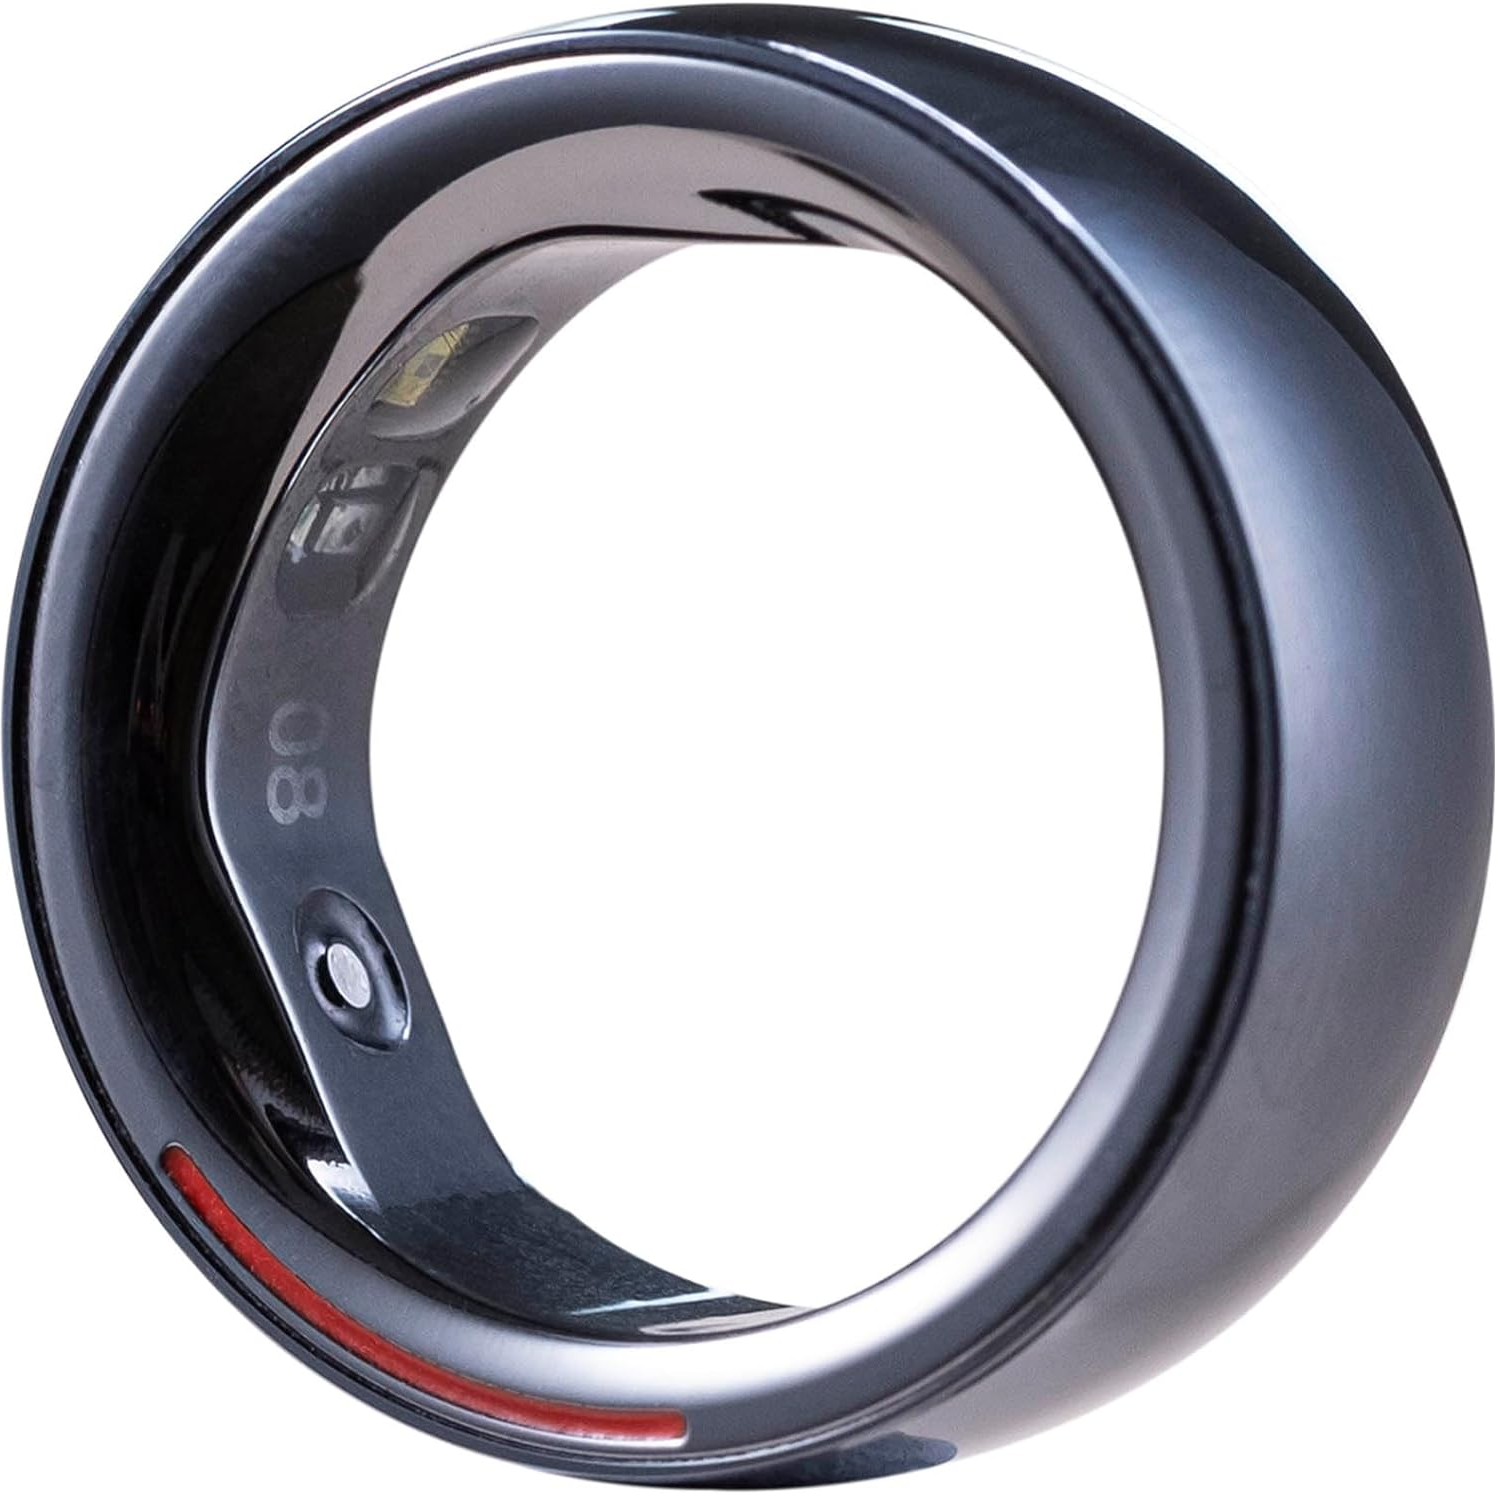 Nordic ProStore Smart Ring stainless steel sensor view